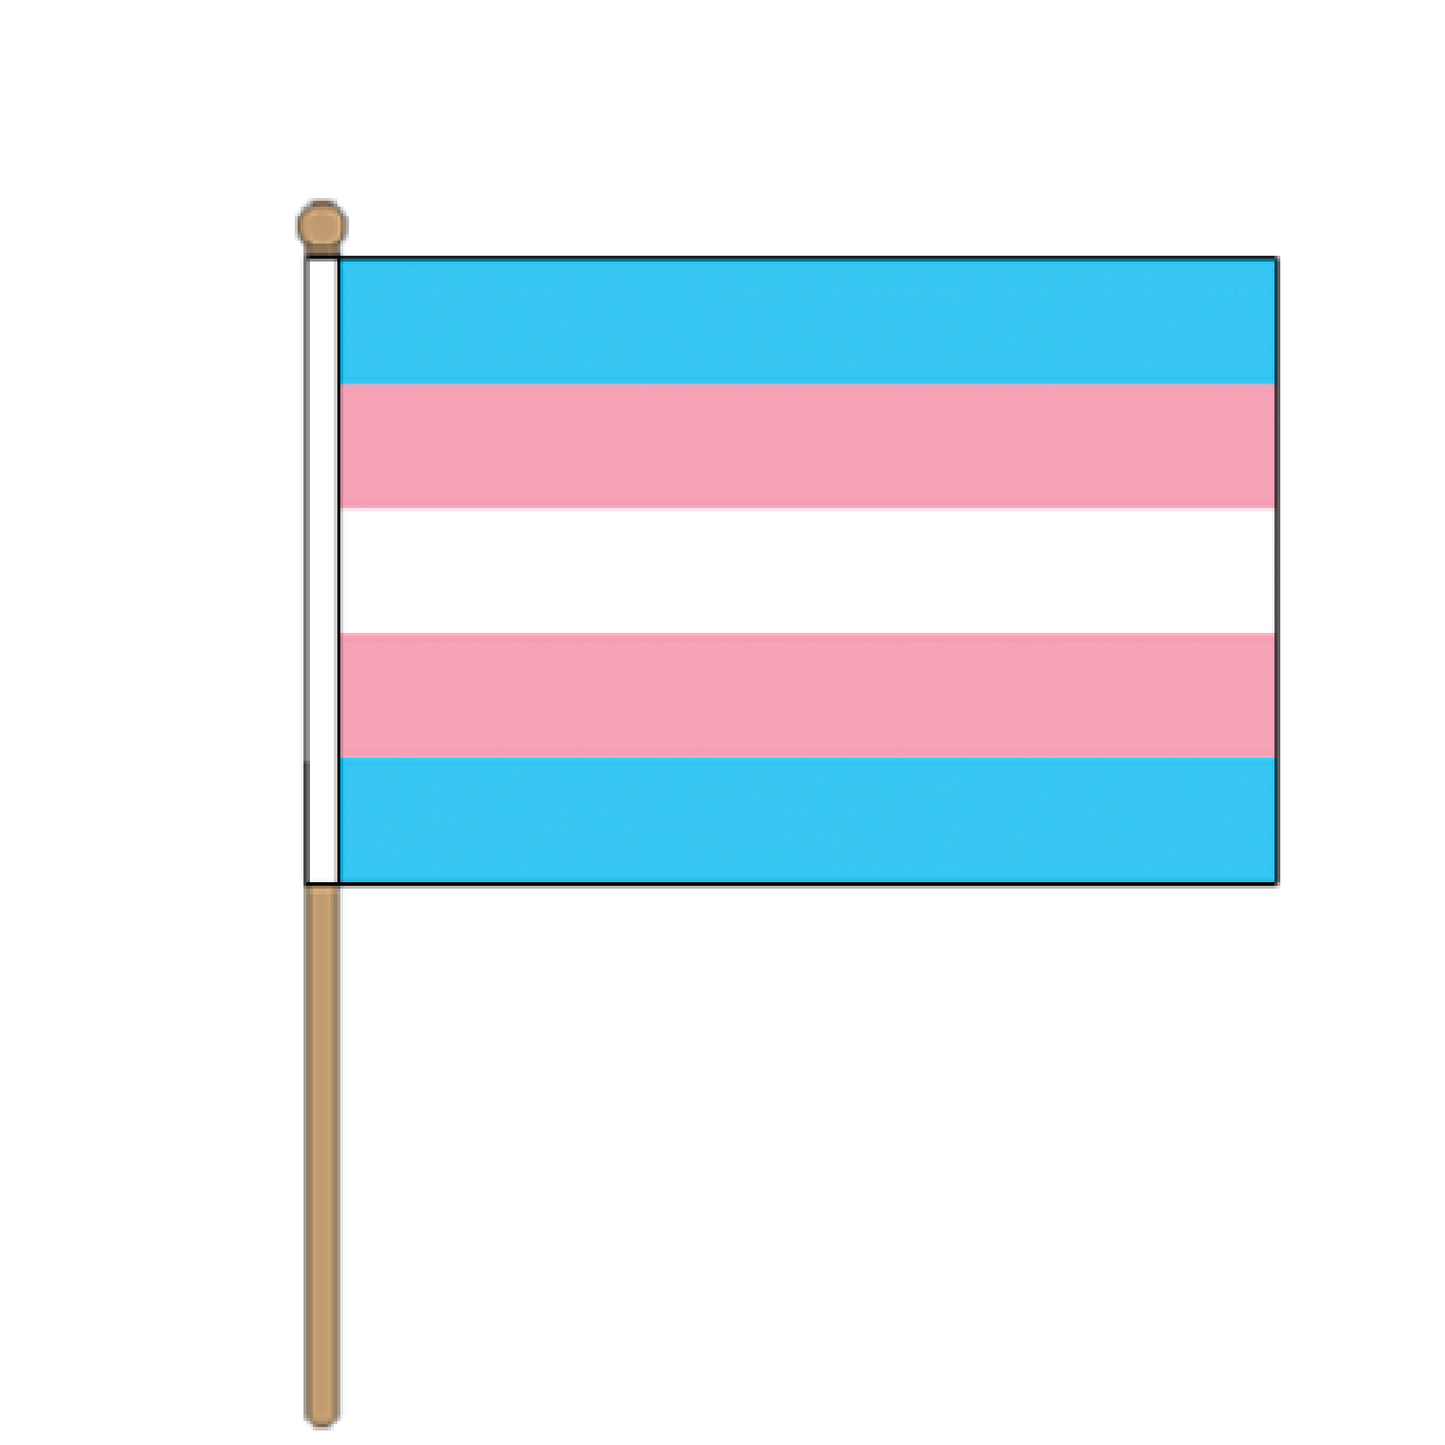 TRANS HAND FLAG - 23cm x 15cm (9" x 6")